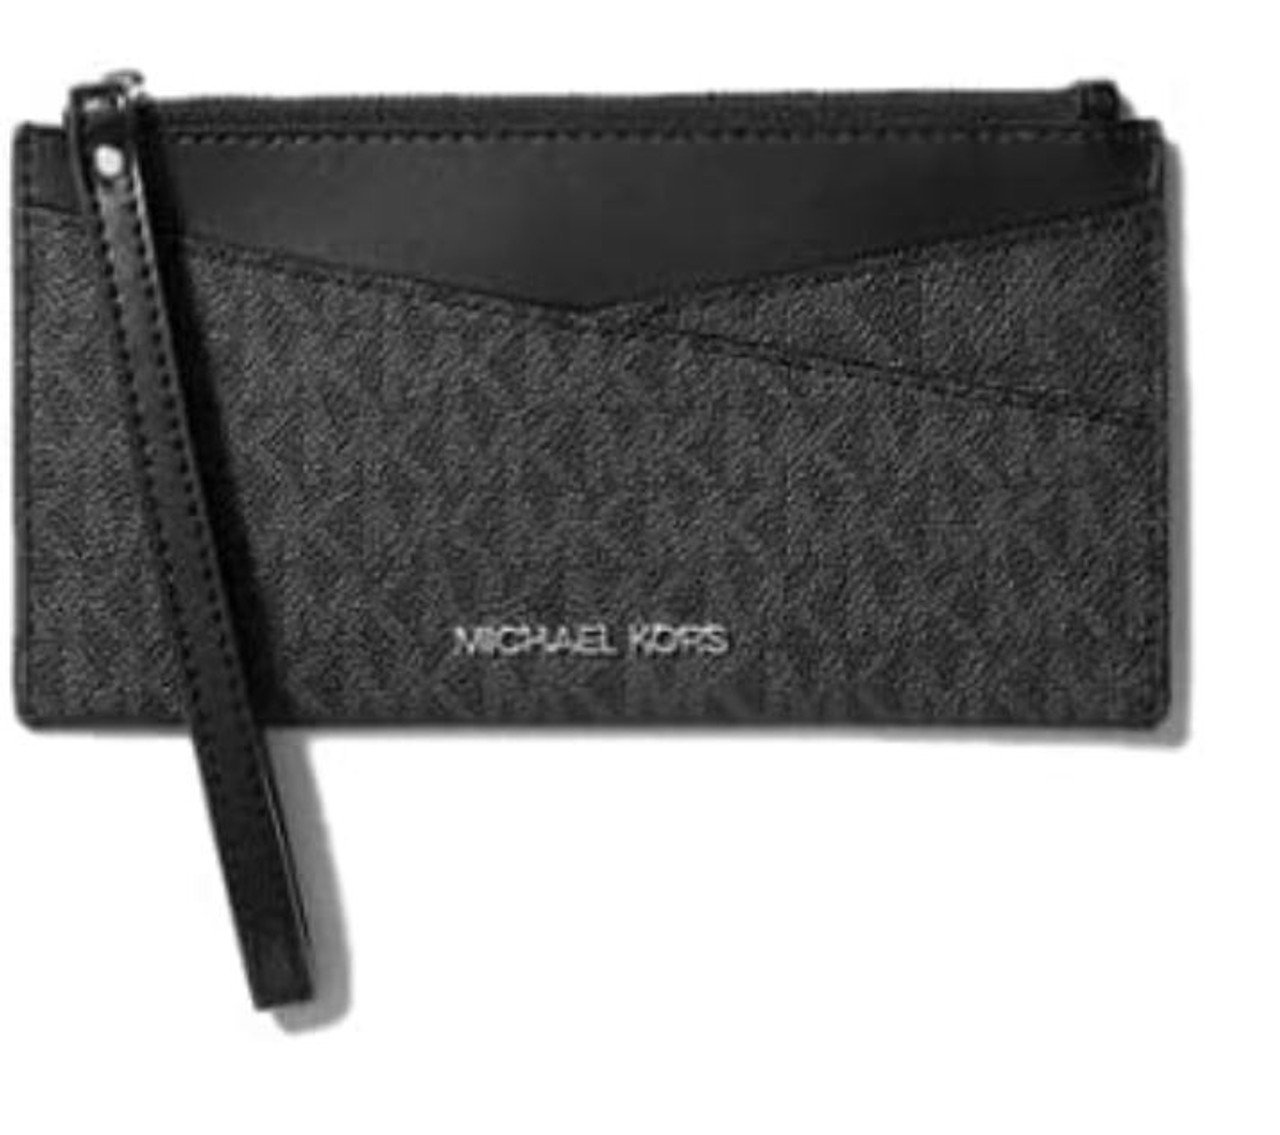 Michael Kors wristlet - Women's handbags